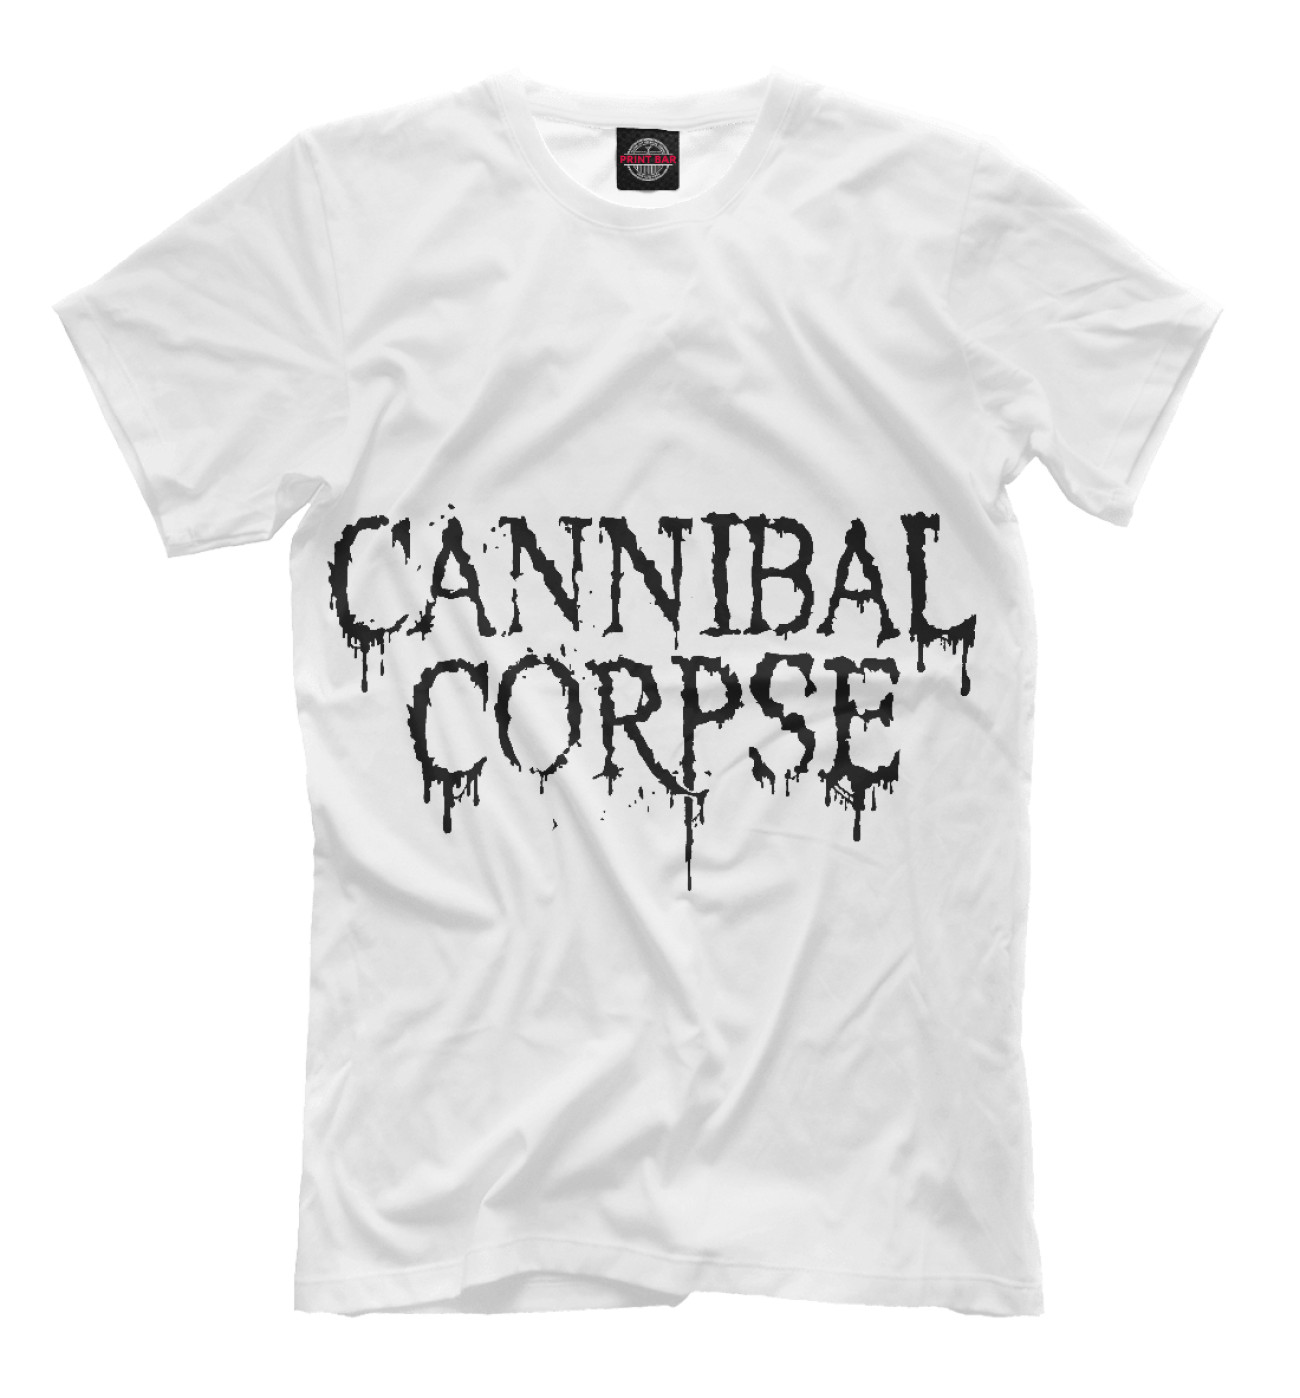 Мужская Футболка Cannibal Corpse, артикул: CCR-921523-fut-2